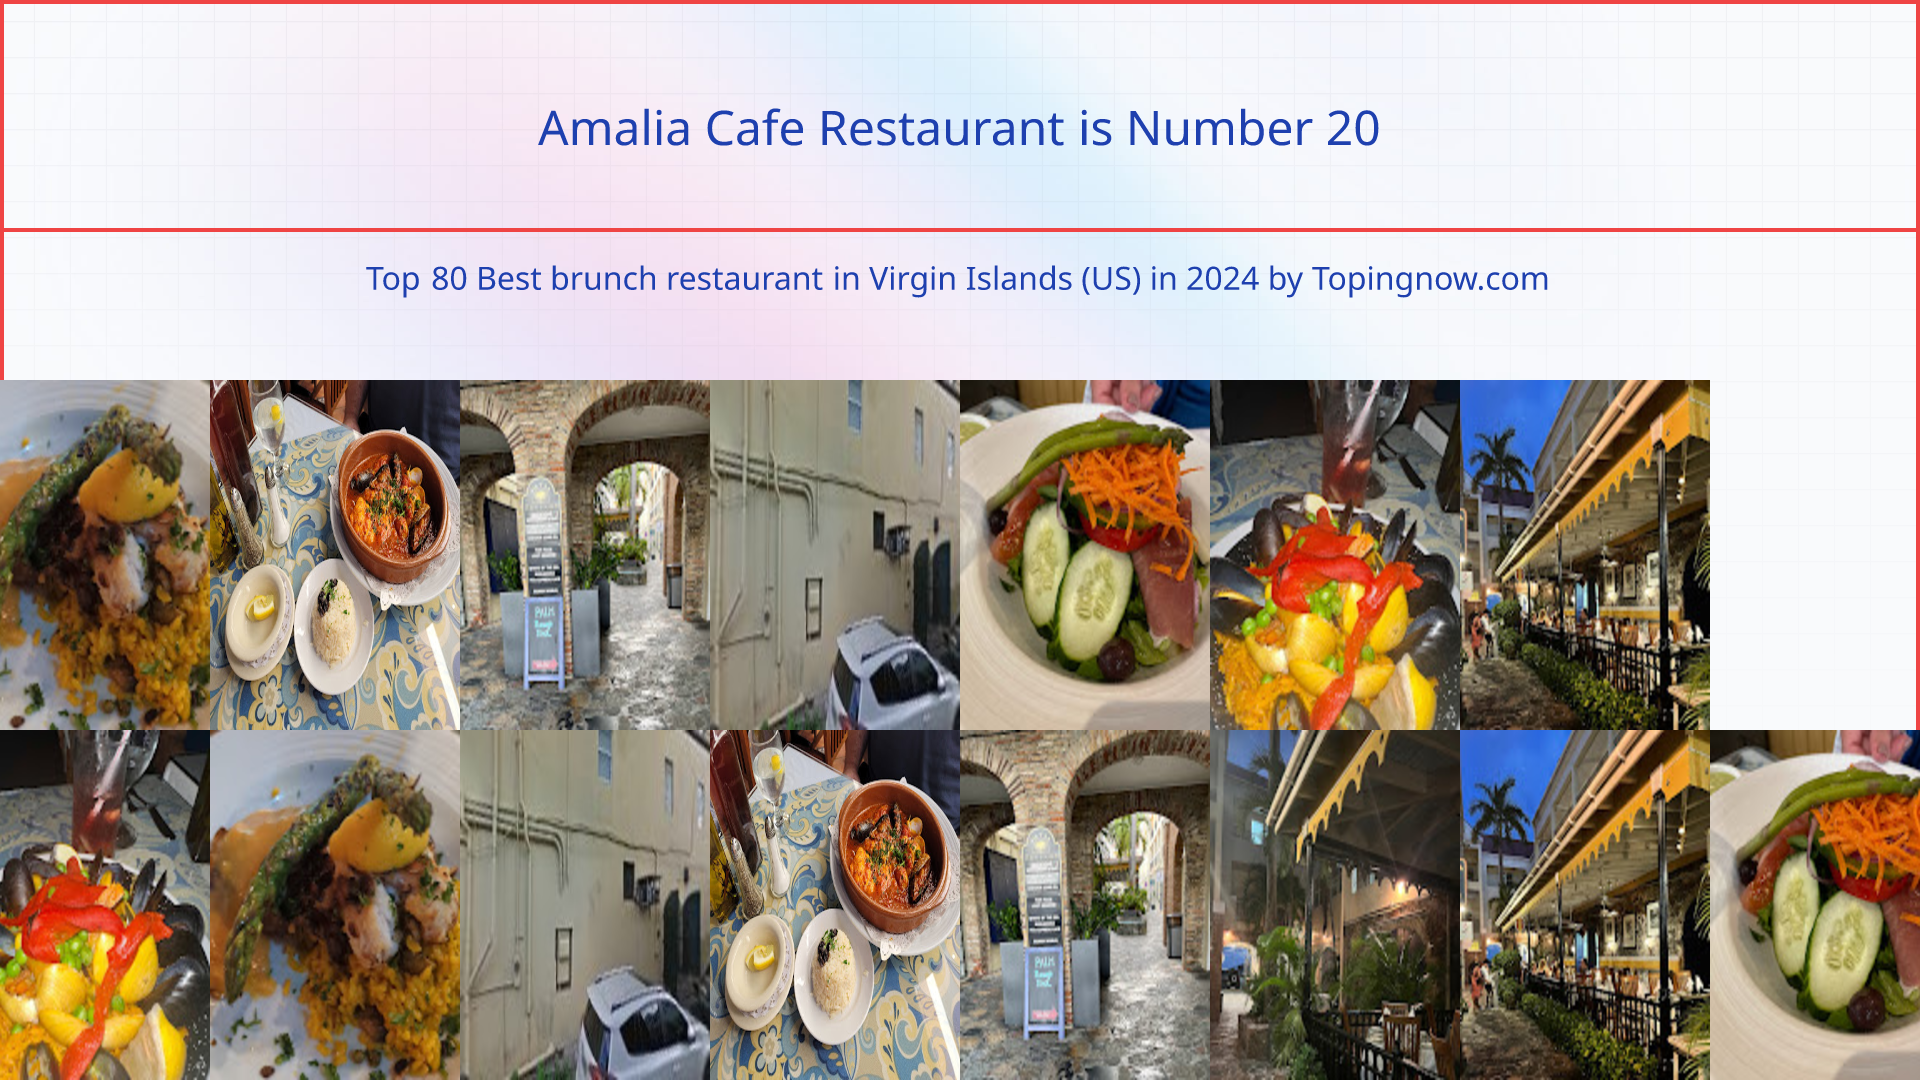 Amalia Cafe Restaurant: Top 80 Best brunch restaurant in Virgin Islands (US) in 2024